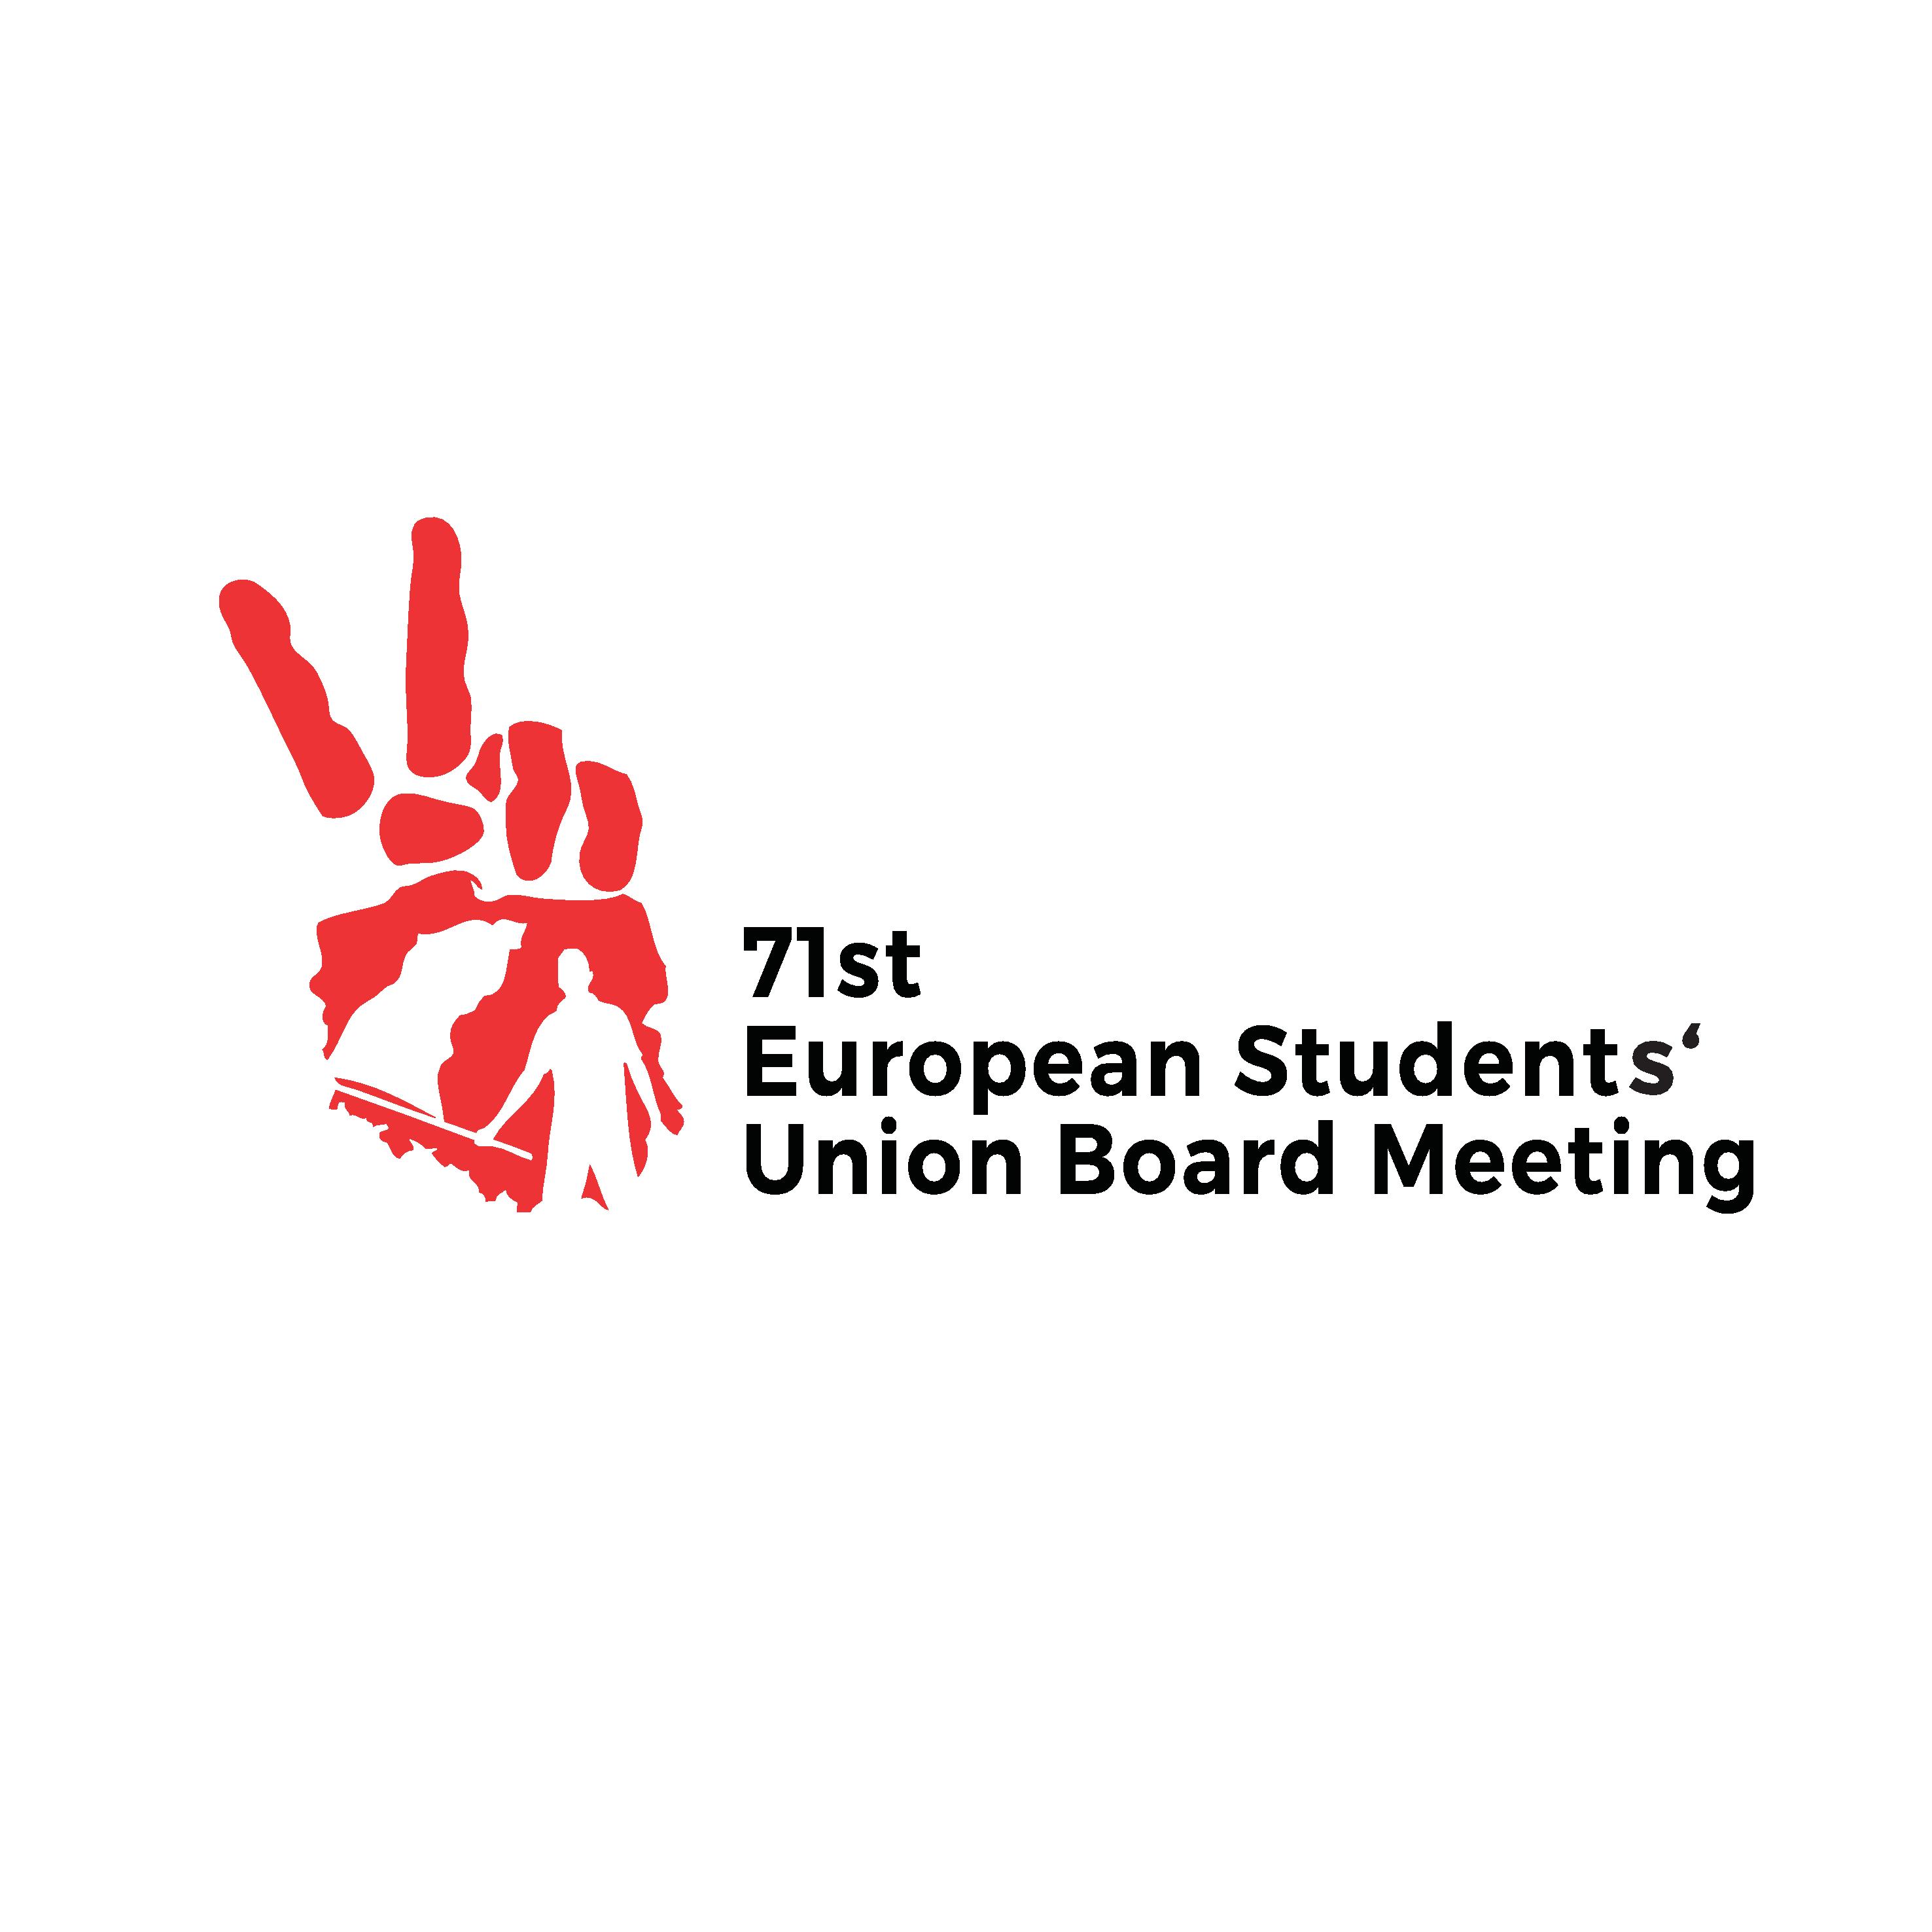 ESU Board Meeting 71 and Board Meeting Seminar